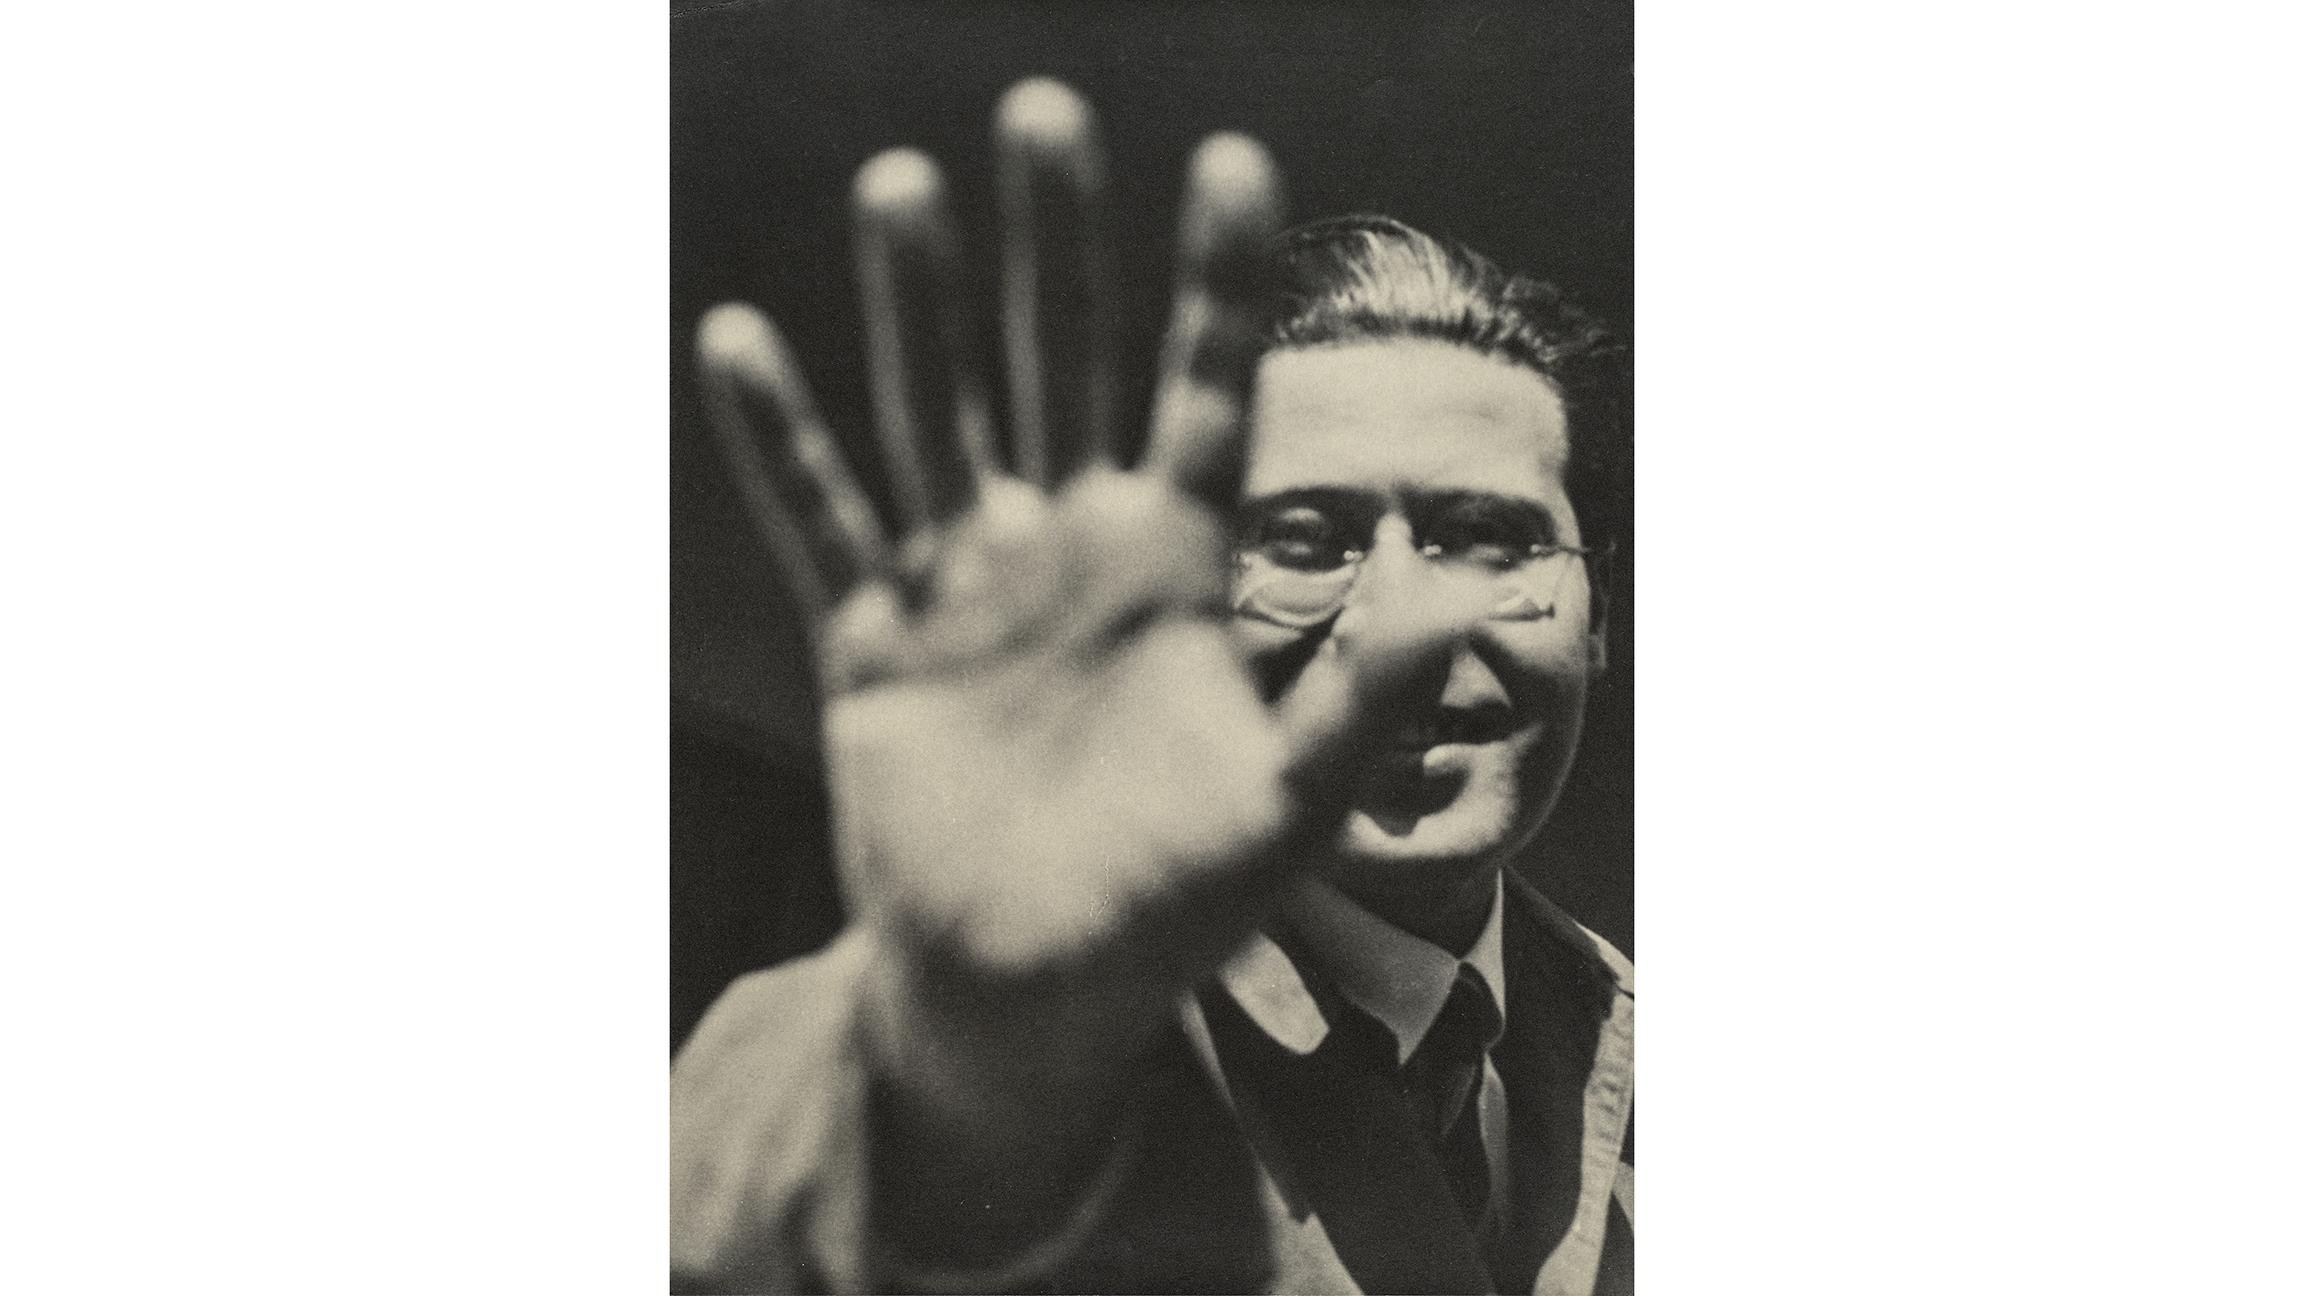 László Moholy-Nagy. Photograph (Self-Portrait with Hand), 1925/29, printed 1940/49. Galerie Berinson, Berlin. © 2016 Hattula Moholy-Nagy/VG Bild-Kunst, Bonn/Artists Rights Society (ARS), New York